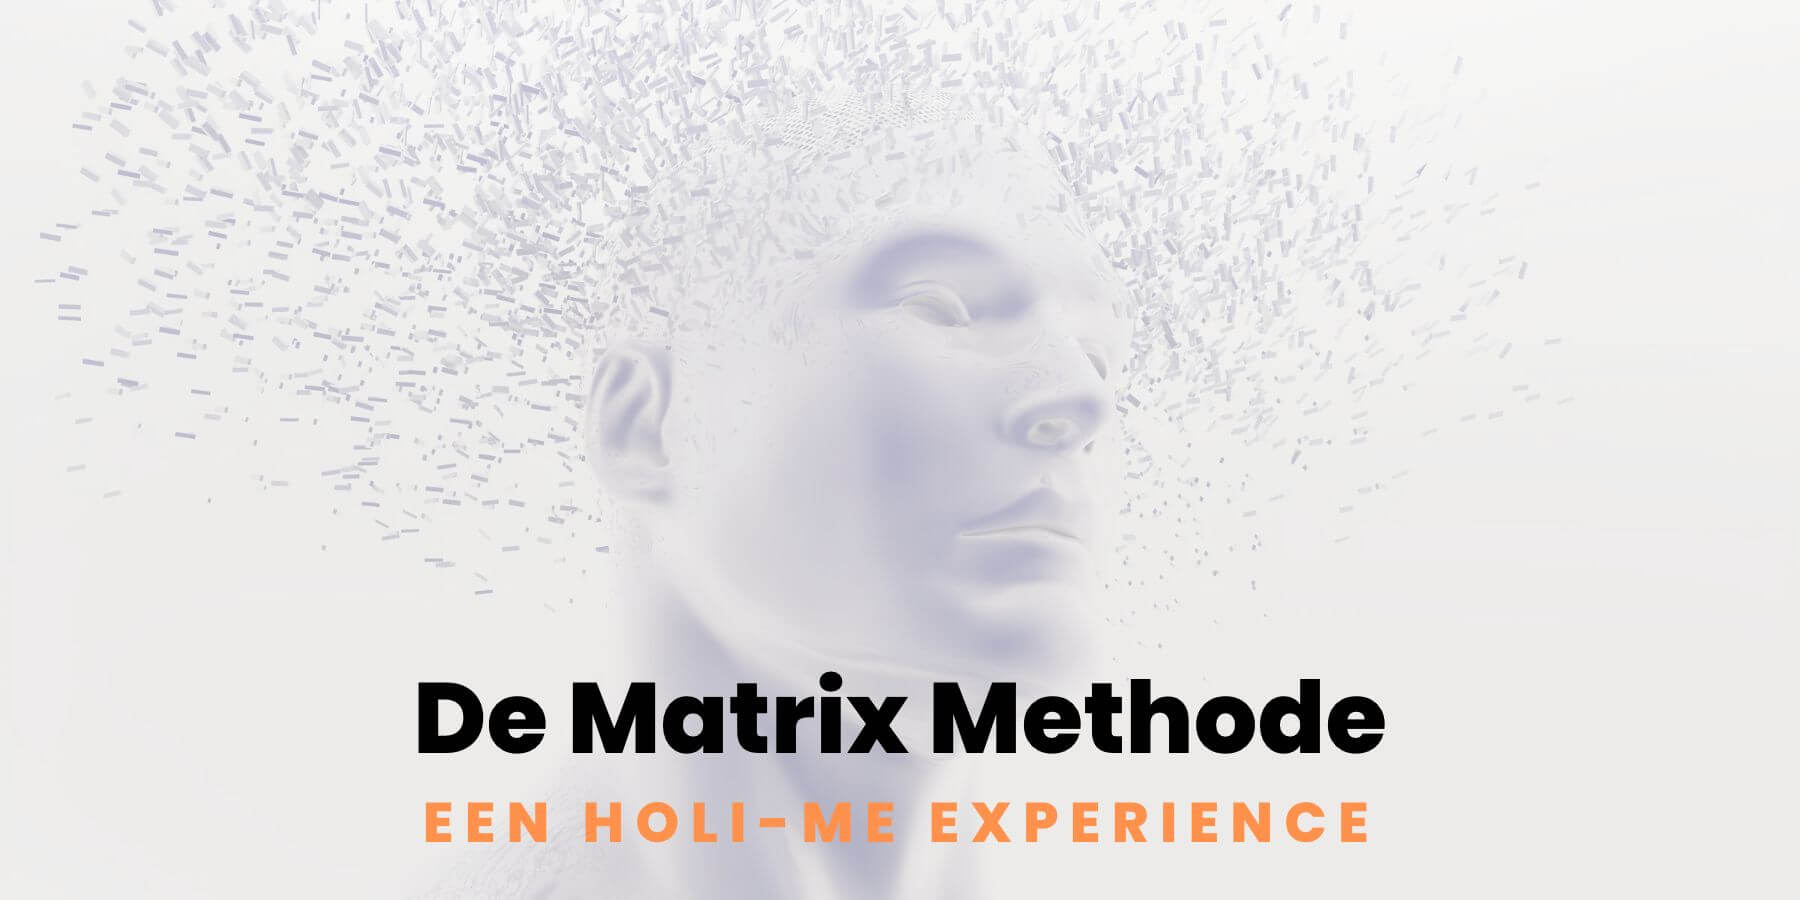 Holi-Me Roadtrip, De Matrix Methode, Holi-Me Experience